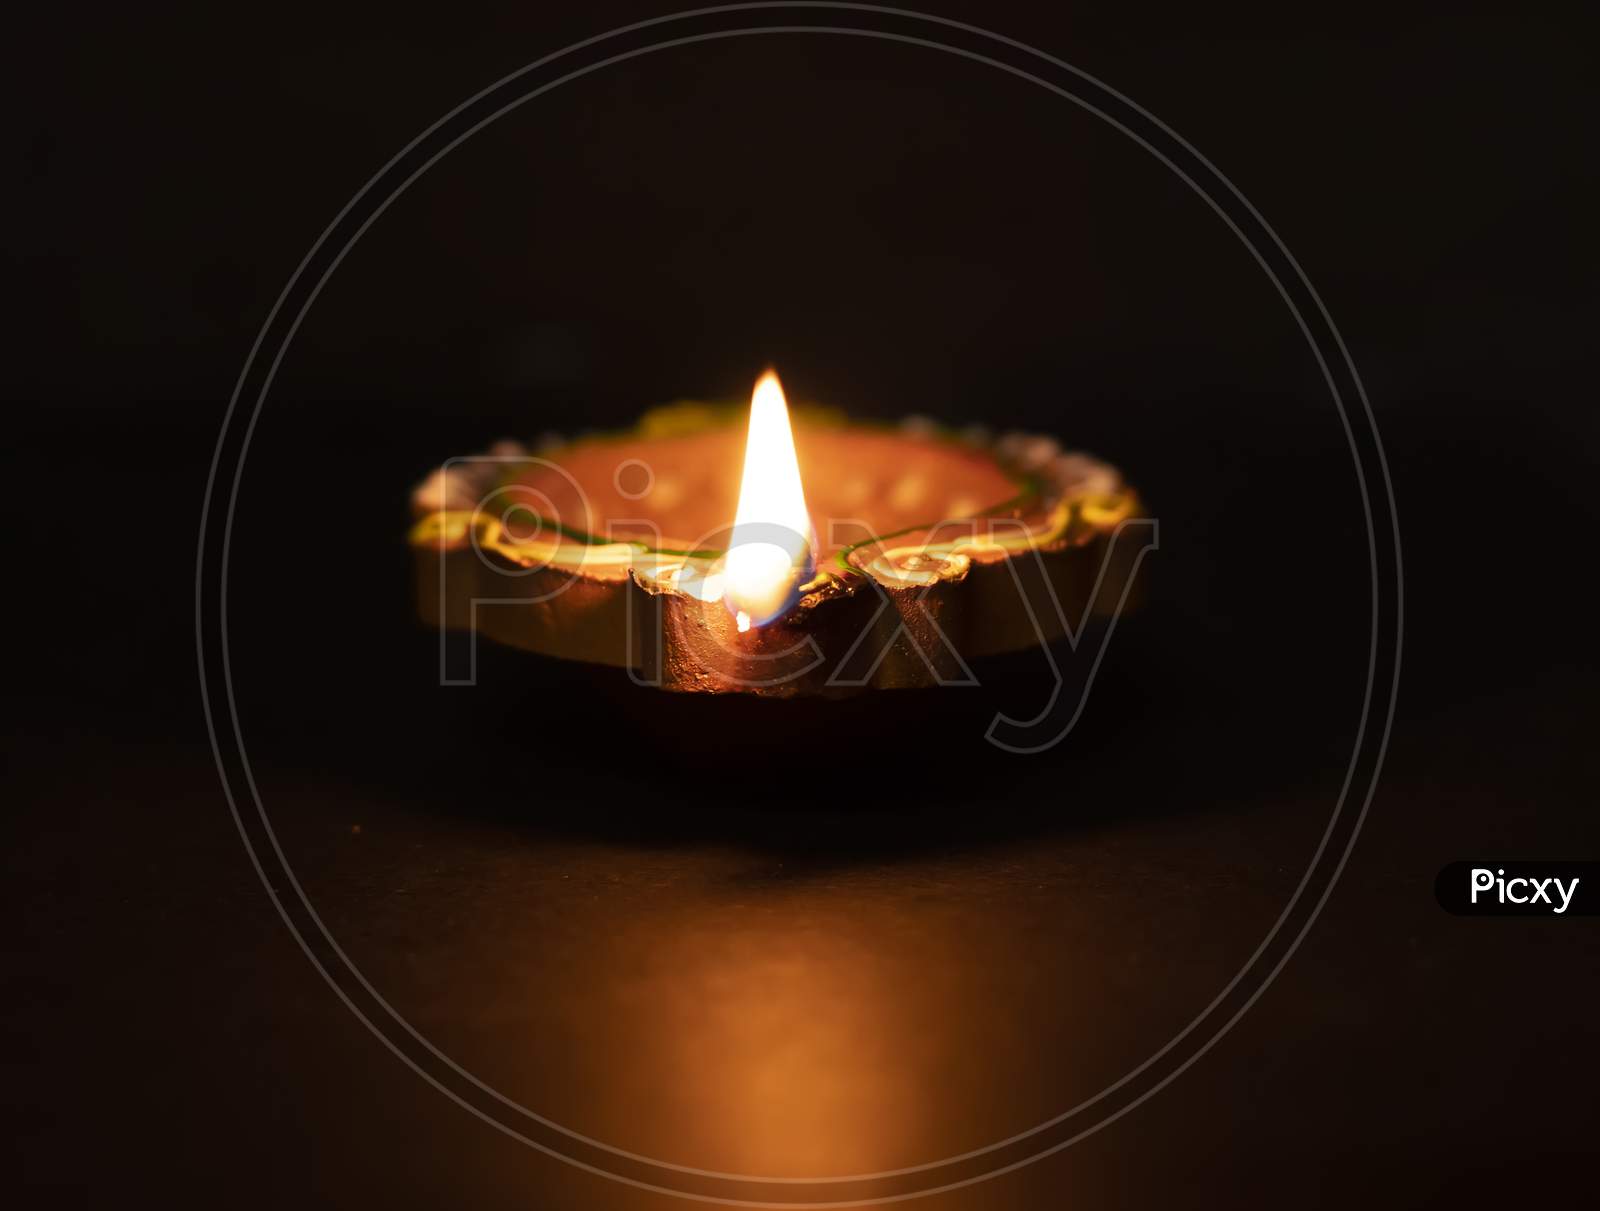 Traditional Clay Diya Lamps Lit During Diwali Celebration